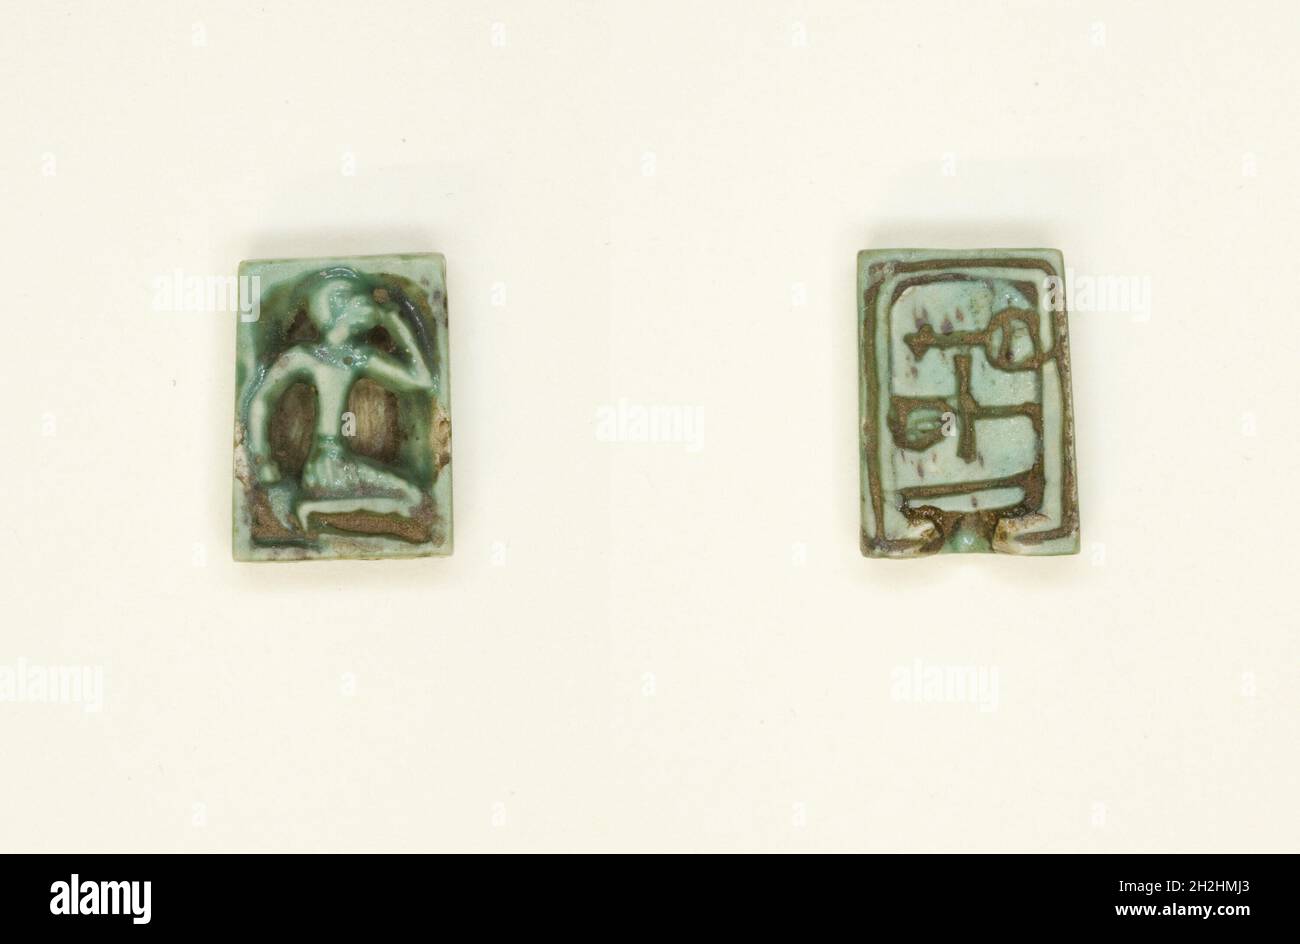 Targa: Uomo con mano a Capo/Nefer, Ankh, Nb, Egitto, nuovo Regno, Dinastie 18-19 (circa 1550-1186 BCE). Foto Stock